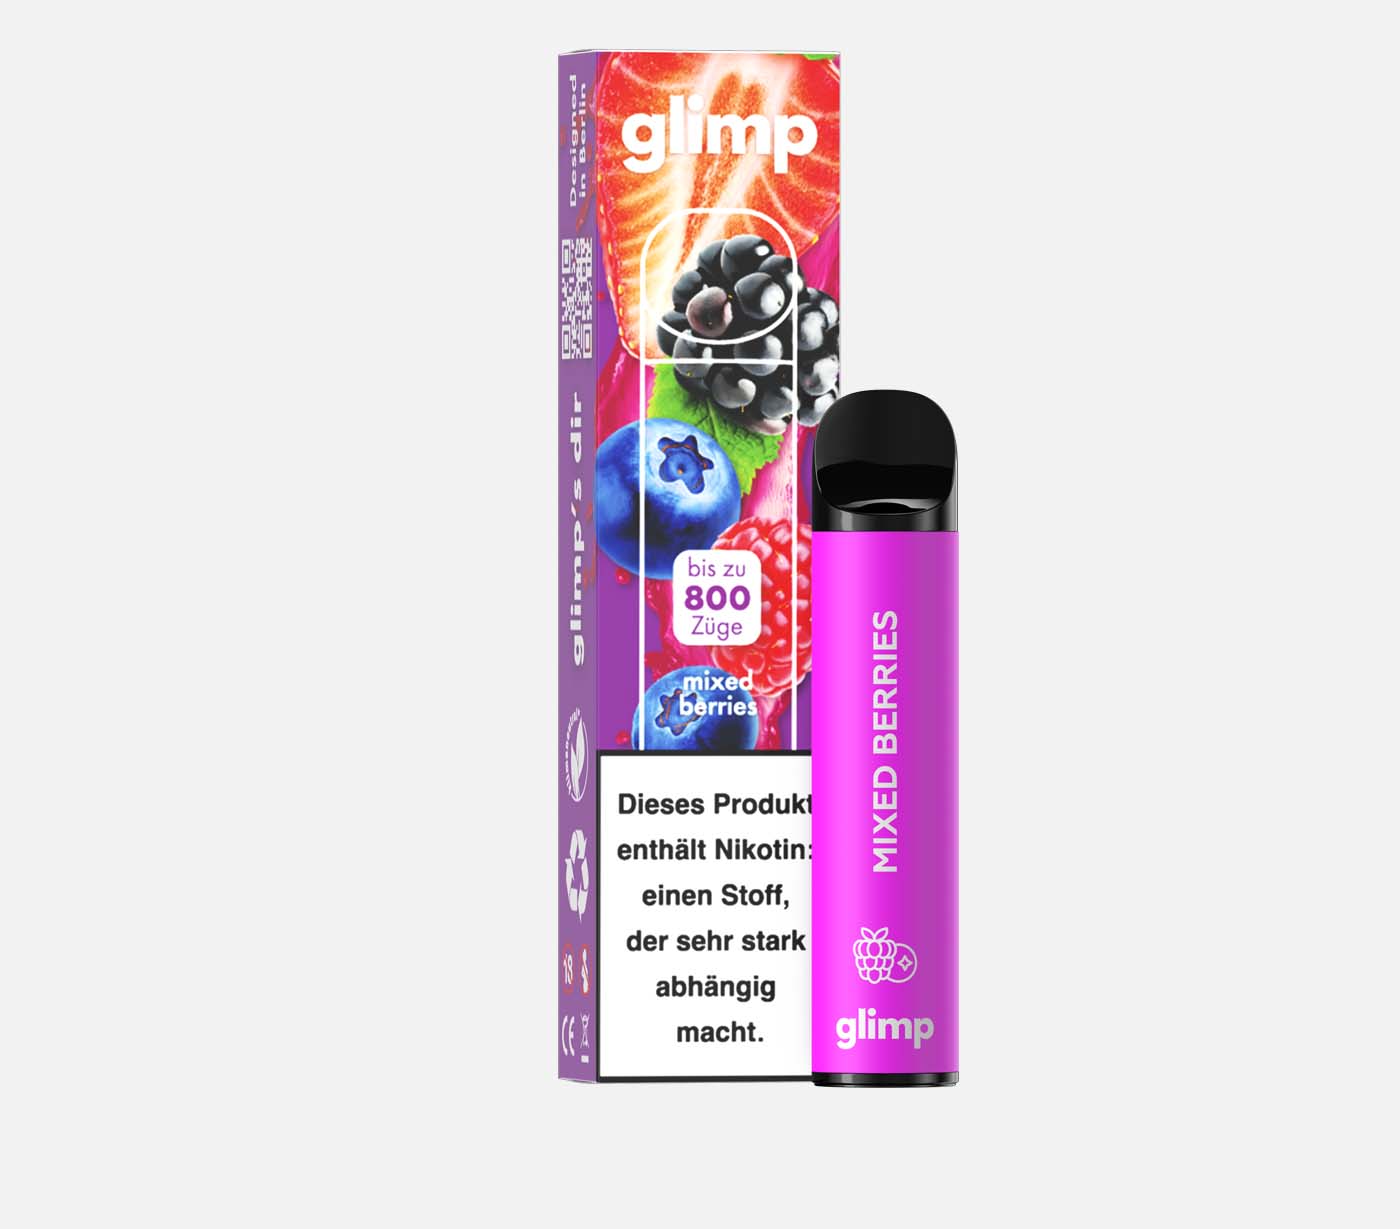 GLIMP 800 Mixed Berries Einweg E-Zigarette